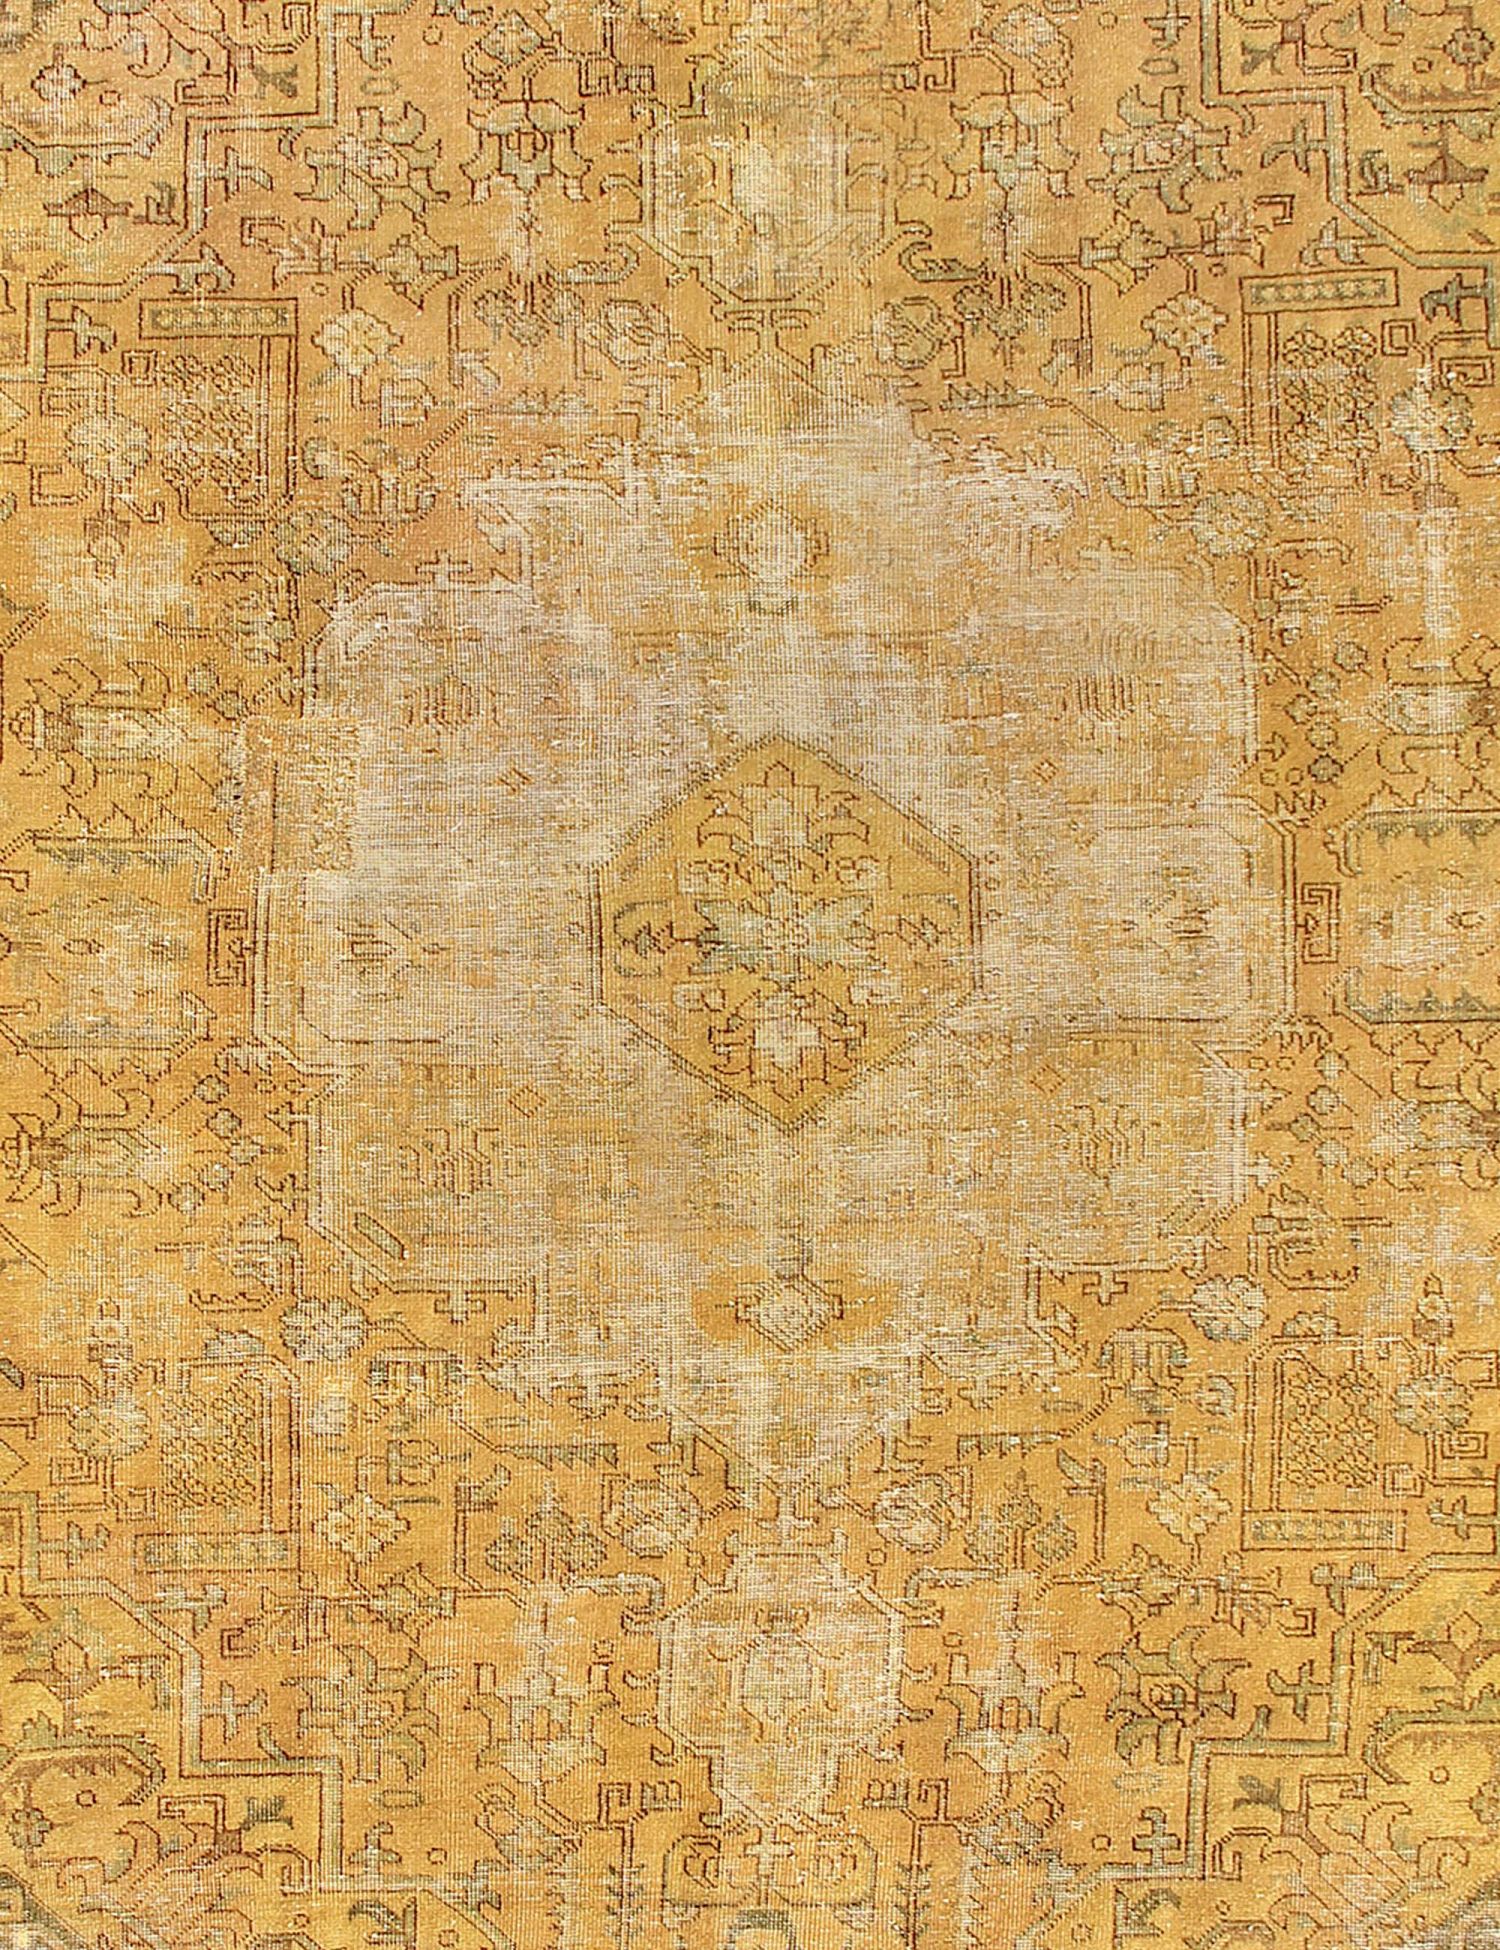 Quadrat  vintage teppich  gelb <br/>313 x 270 cm